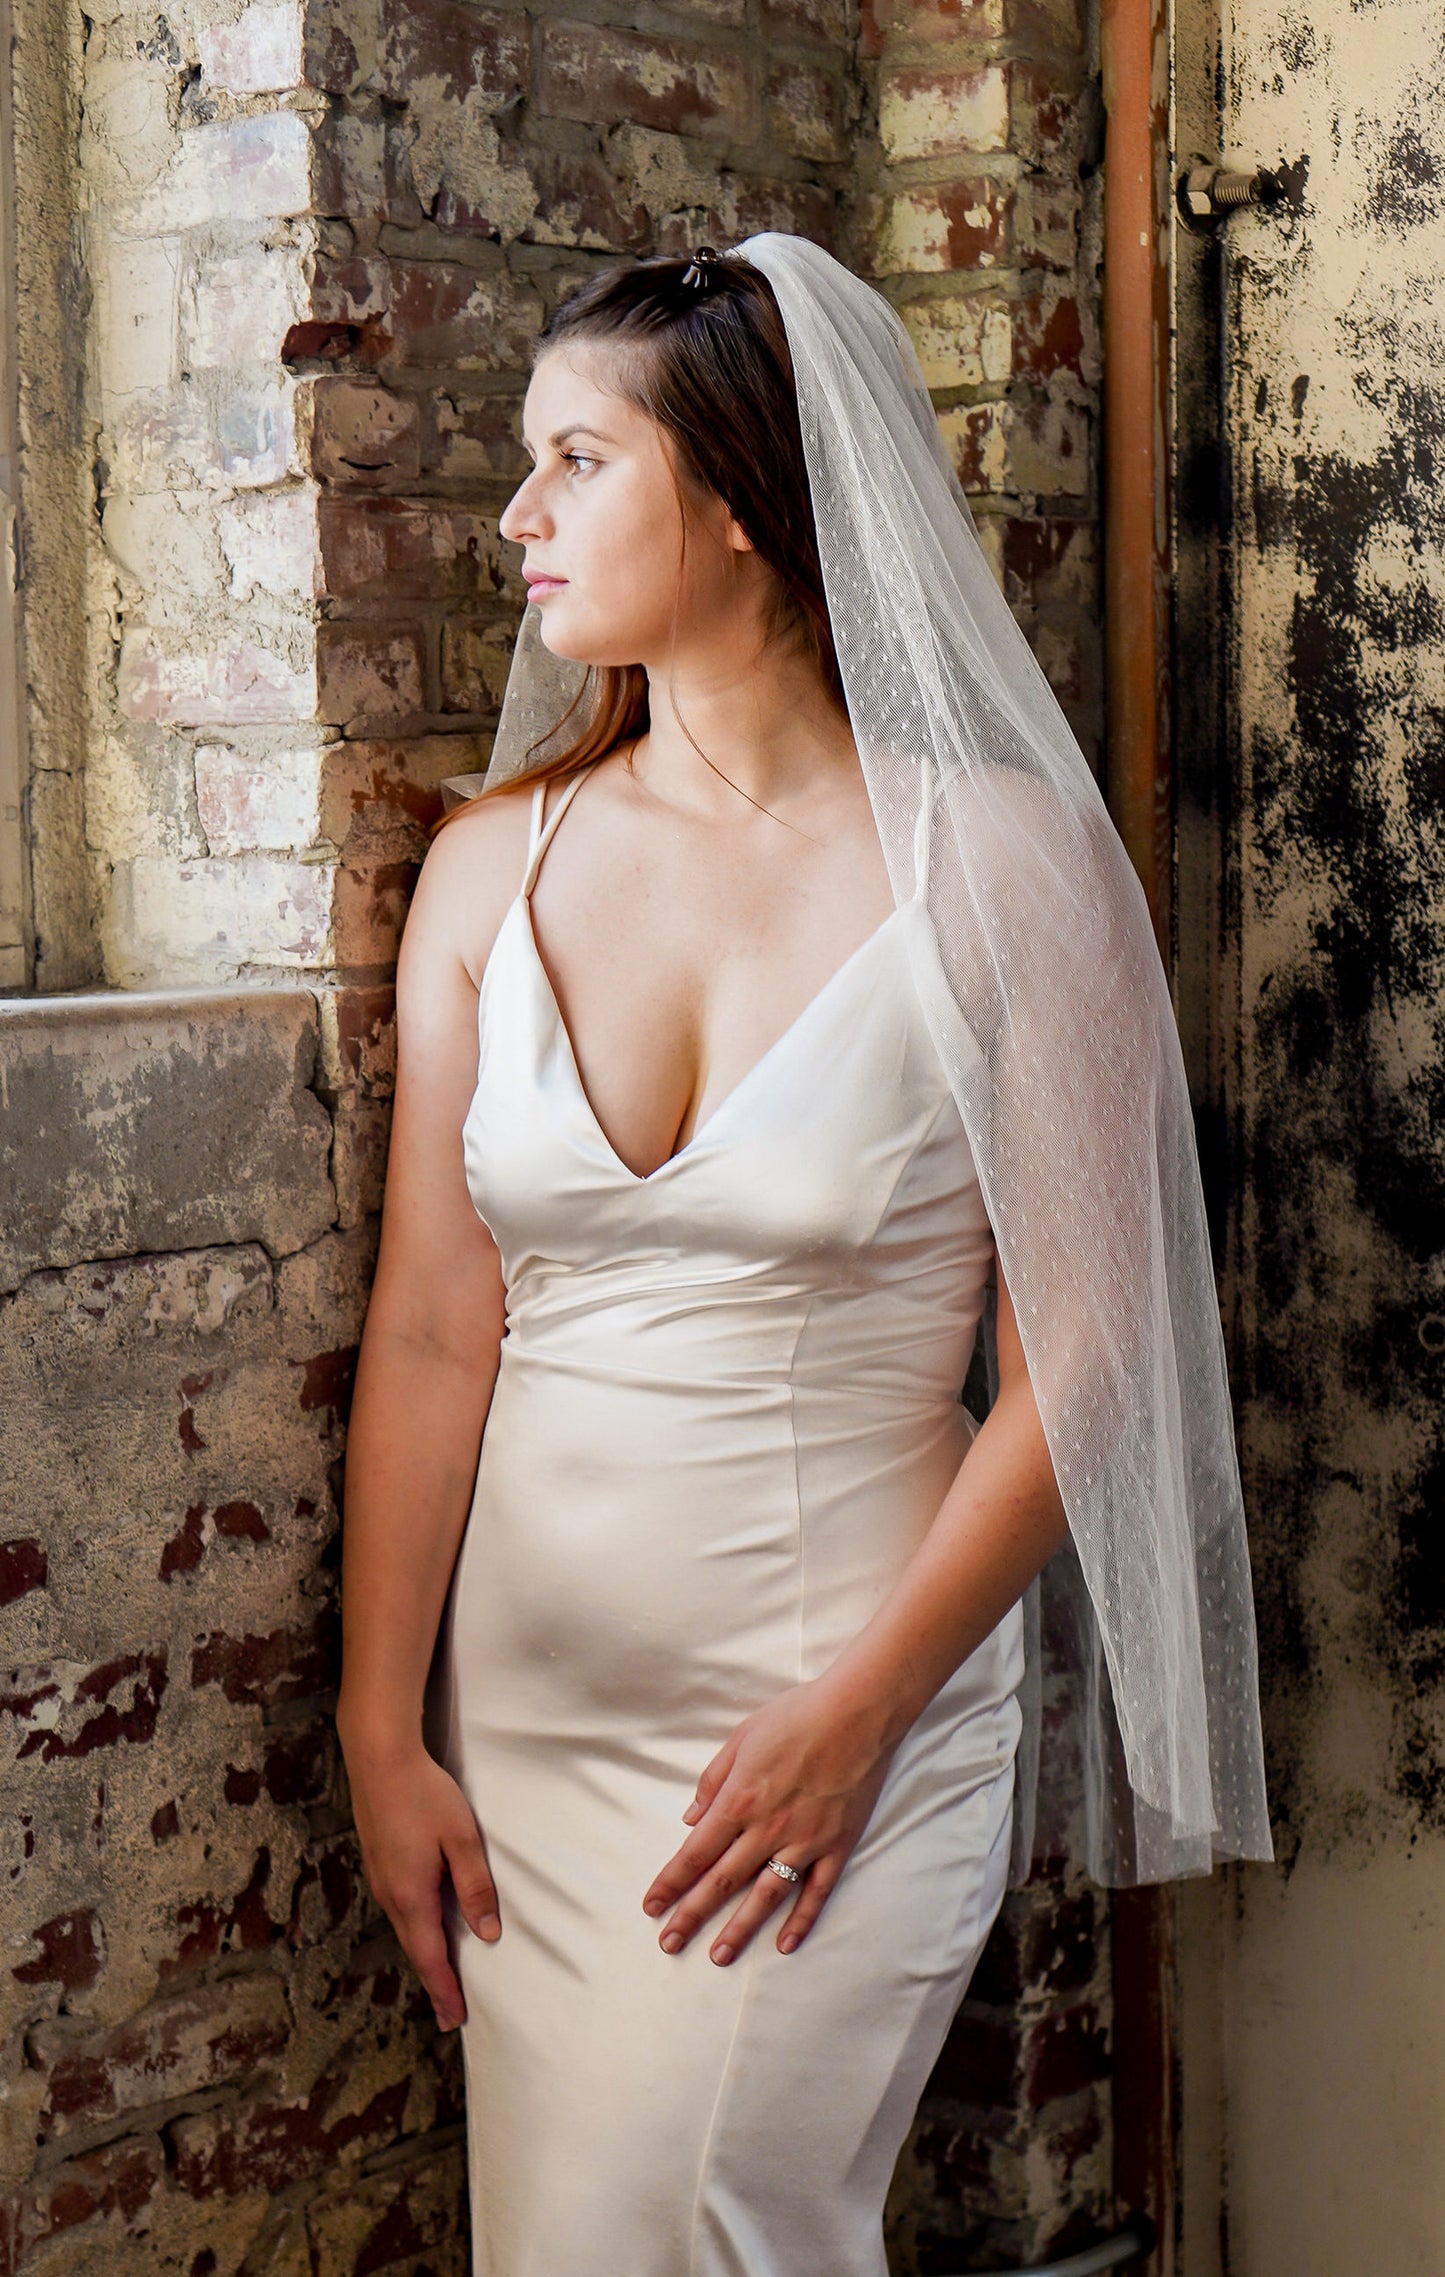 1pc Women Polka Dot Pattern Elegant Bridal Veil For Wedding